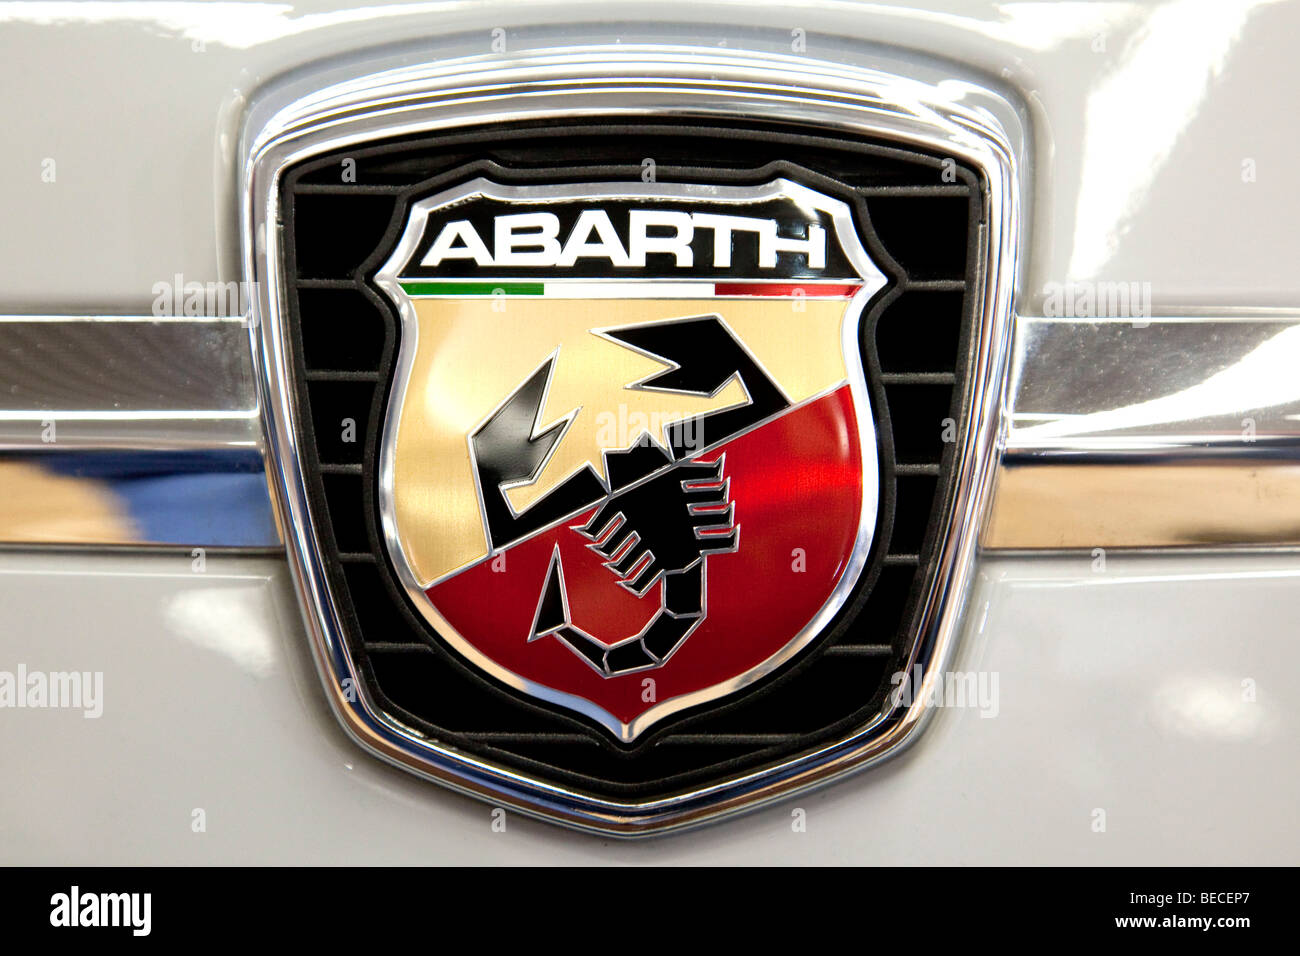 Fiat Abarth emblem on a car Stock Photo